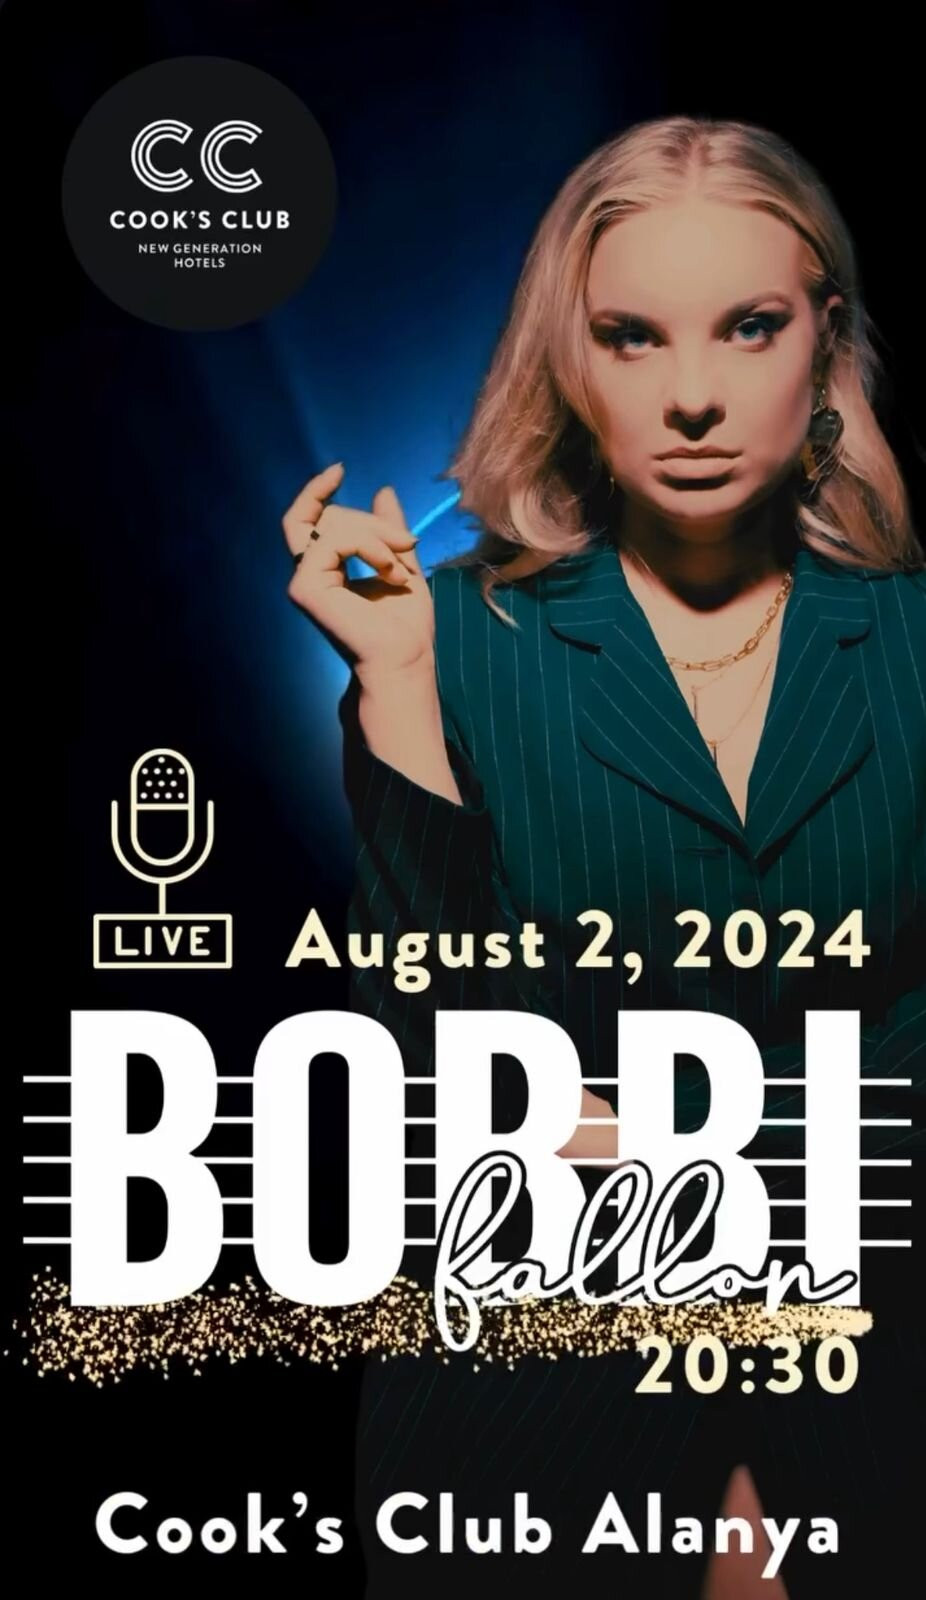 2nd August Bobbi Fallon concert at Cook's Club Alanya